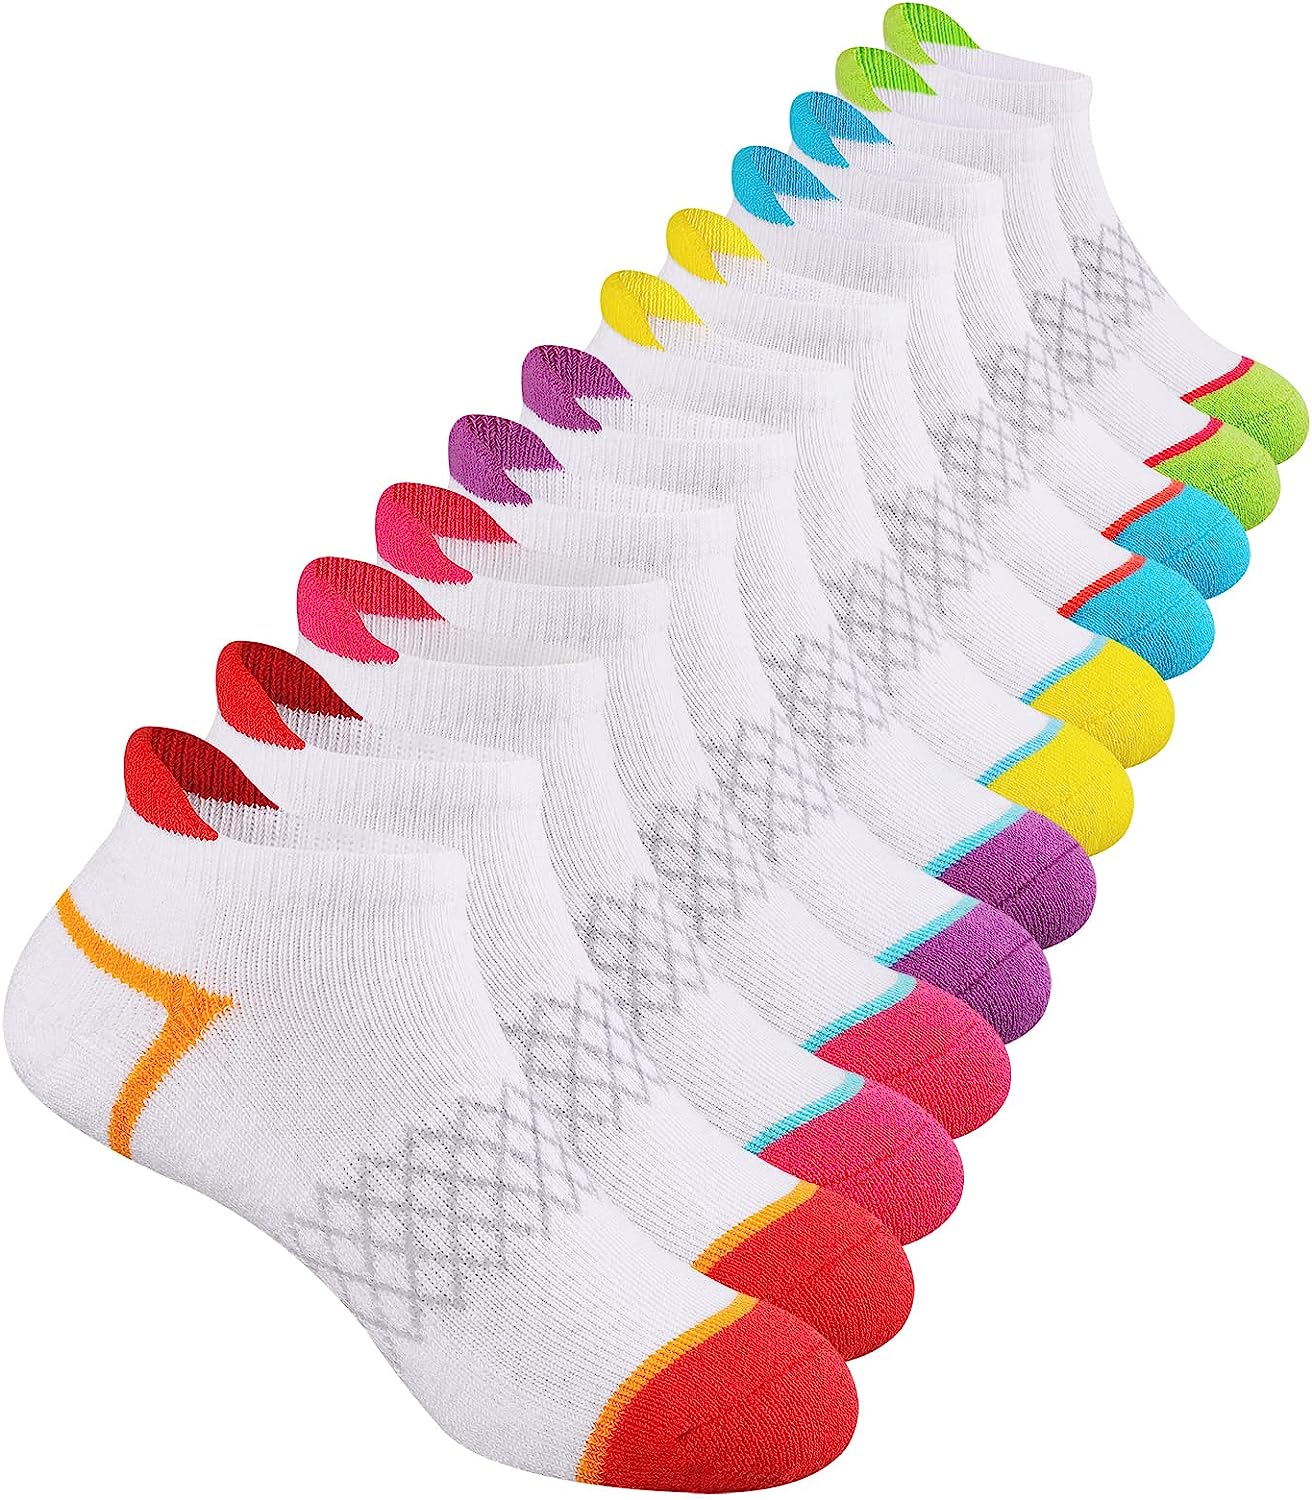 Comfoex 12 Pairs Girls Socks Ankle Athletic Socks [...]